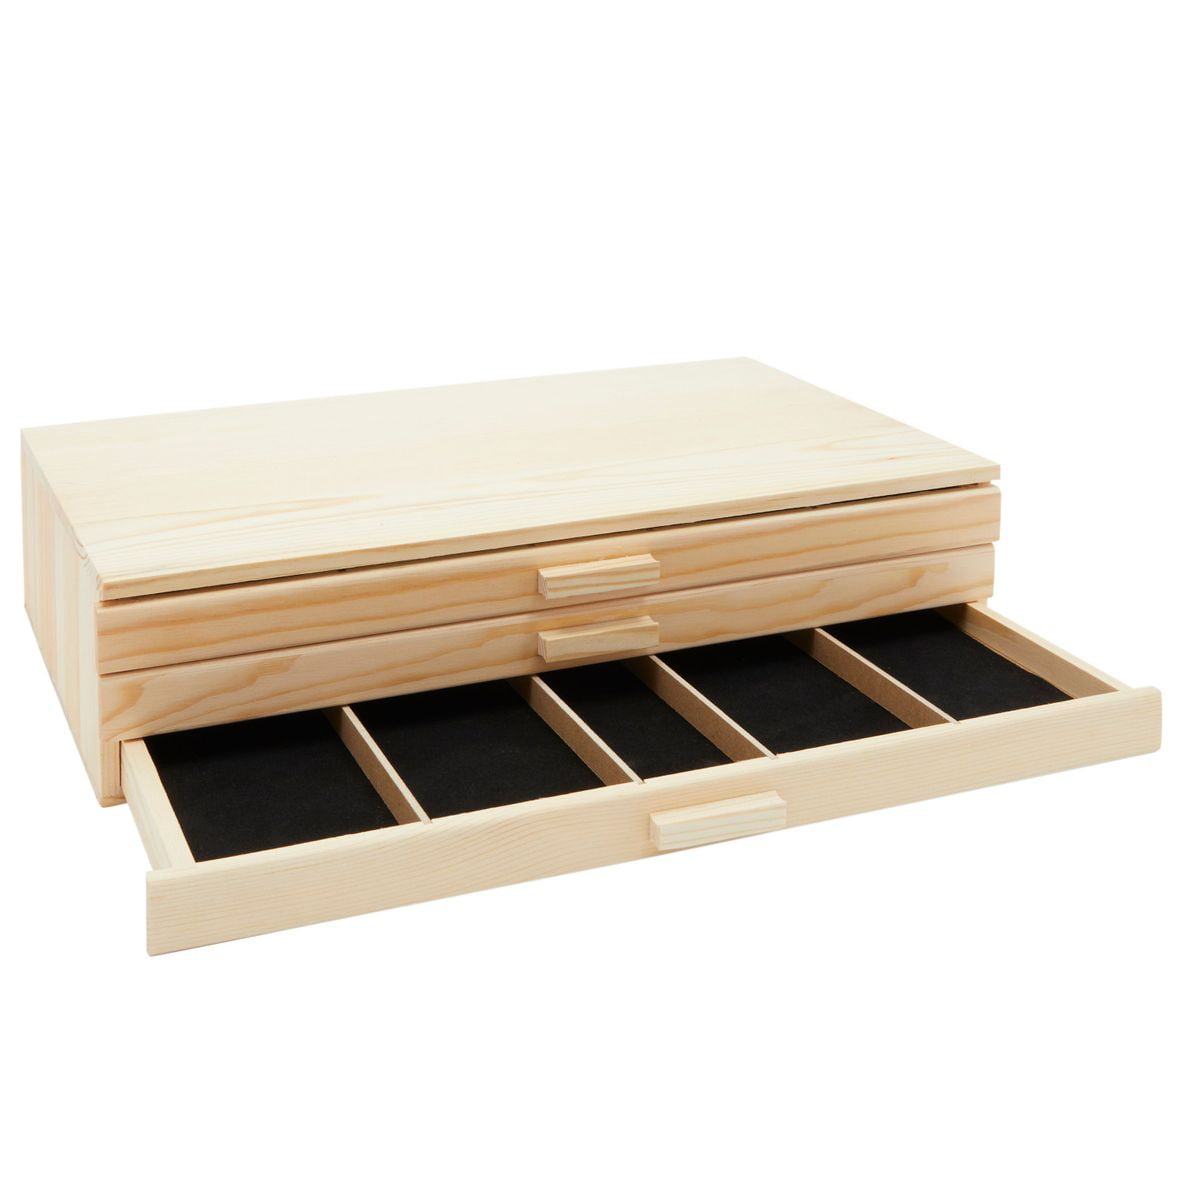 5x10 3 S 5 cm 3 S Plain Wooden Box 3 Drawers Decoupage 15x10 